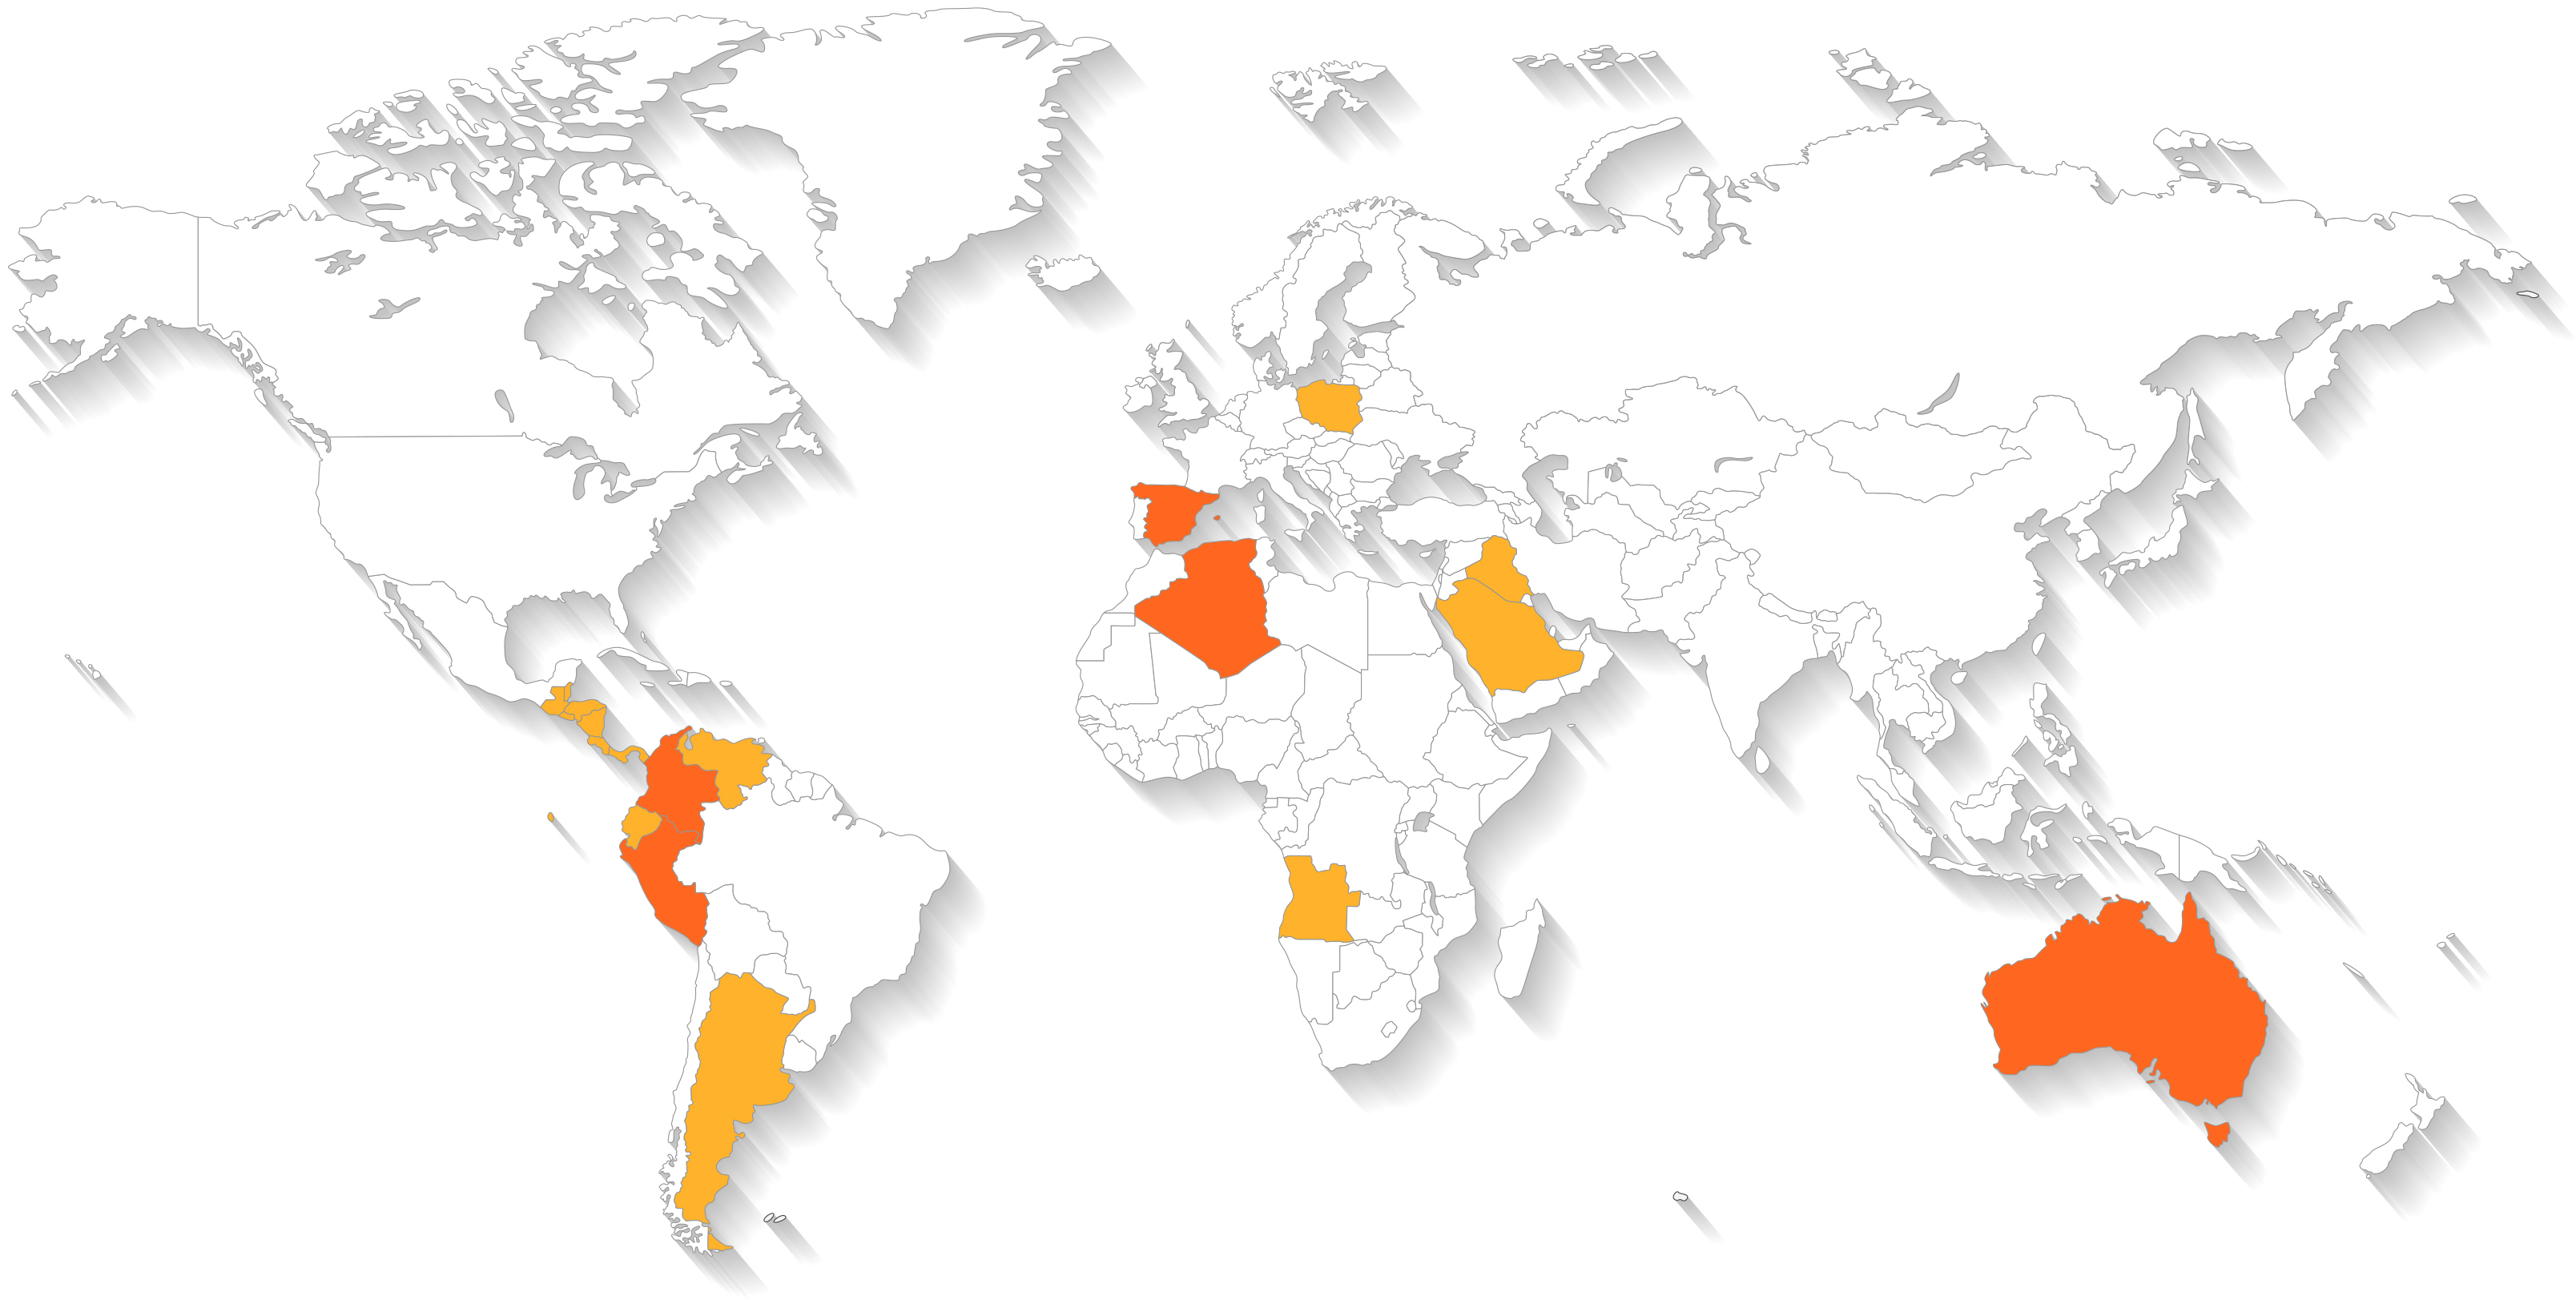 OFITECO presence around the world